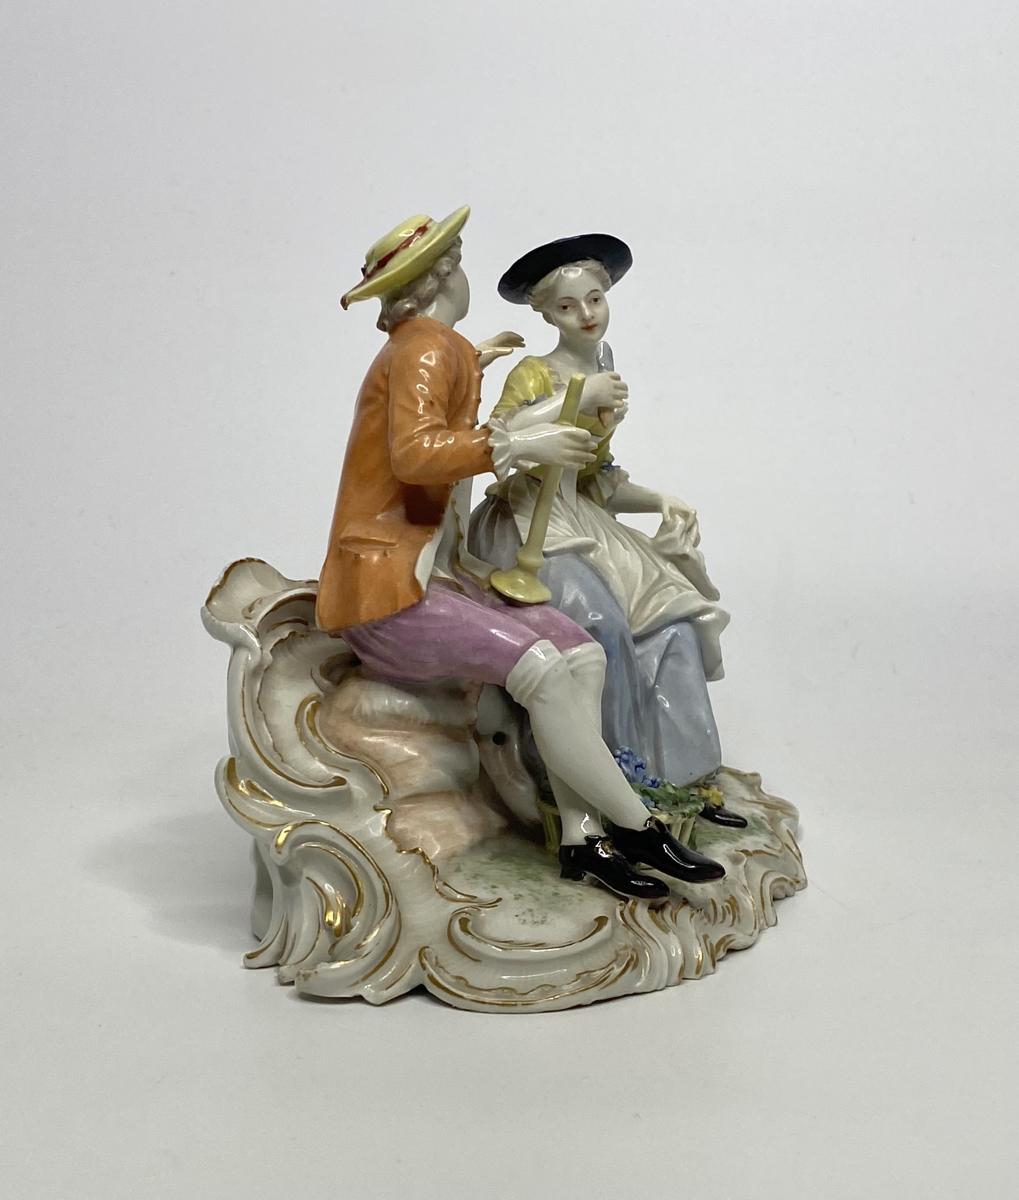 Ludwigsburg porcelain figure group, J.C. Haselmeyer, circa 1770